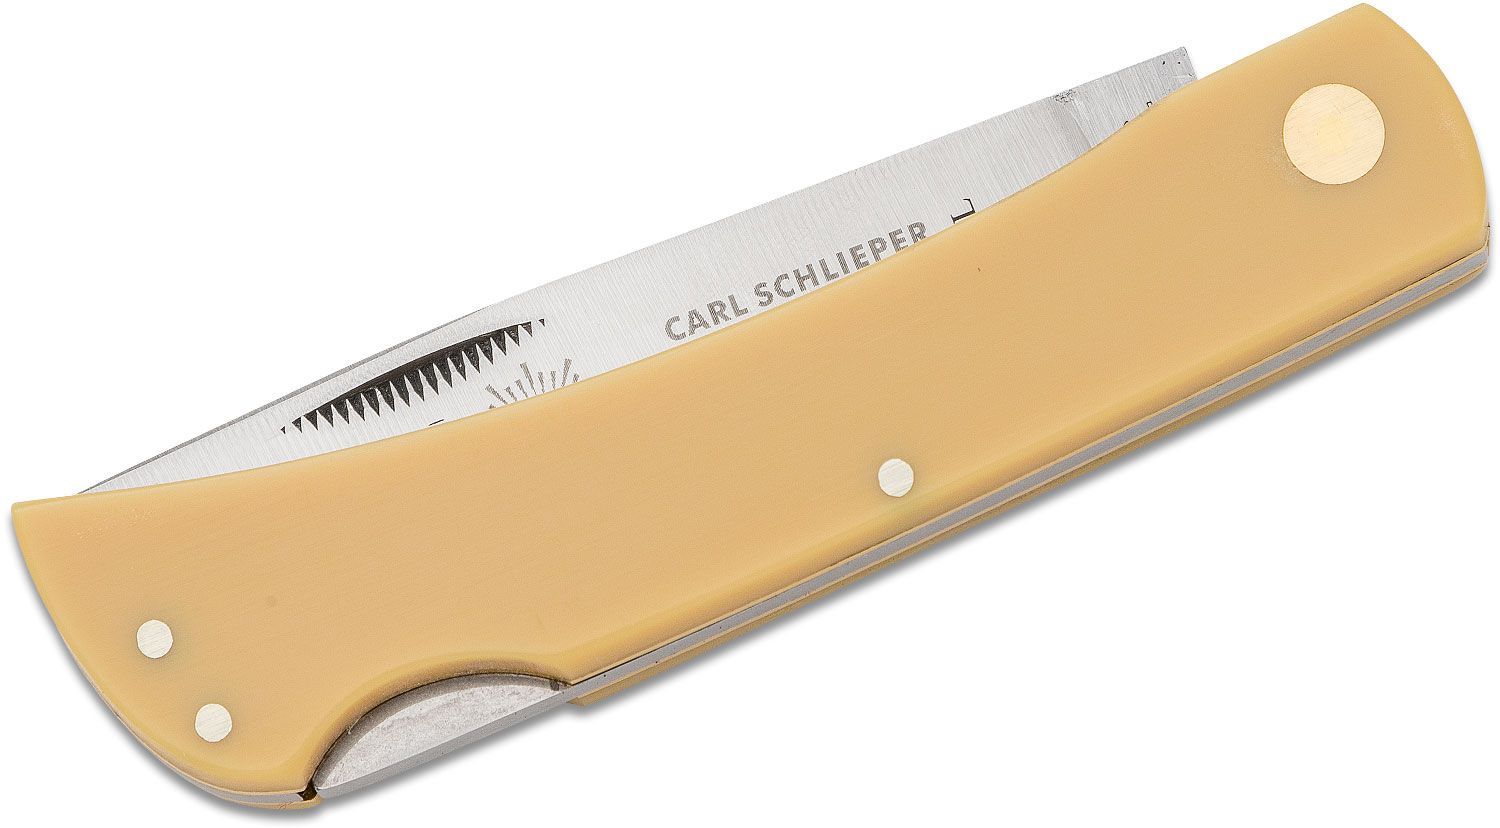 German Eye Brand Carl Schlieper Sodbuster Lockback Folding Knife